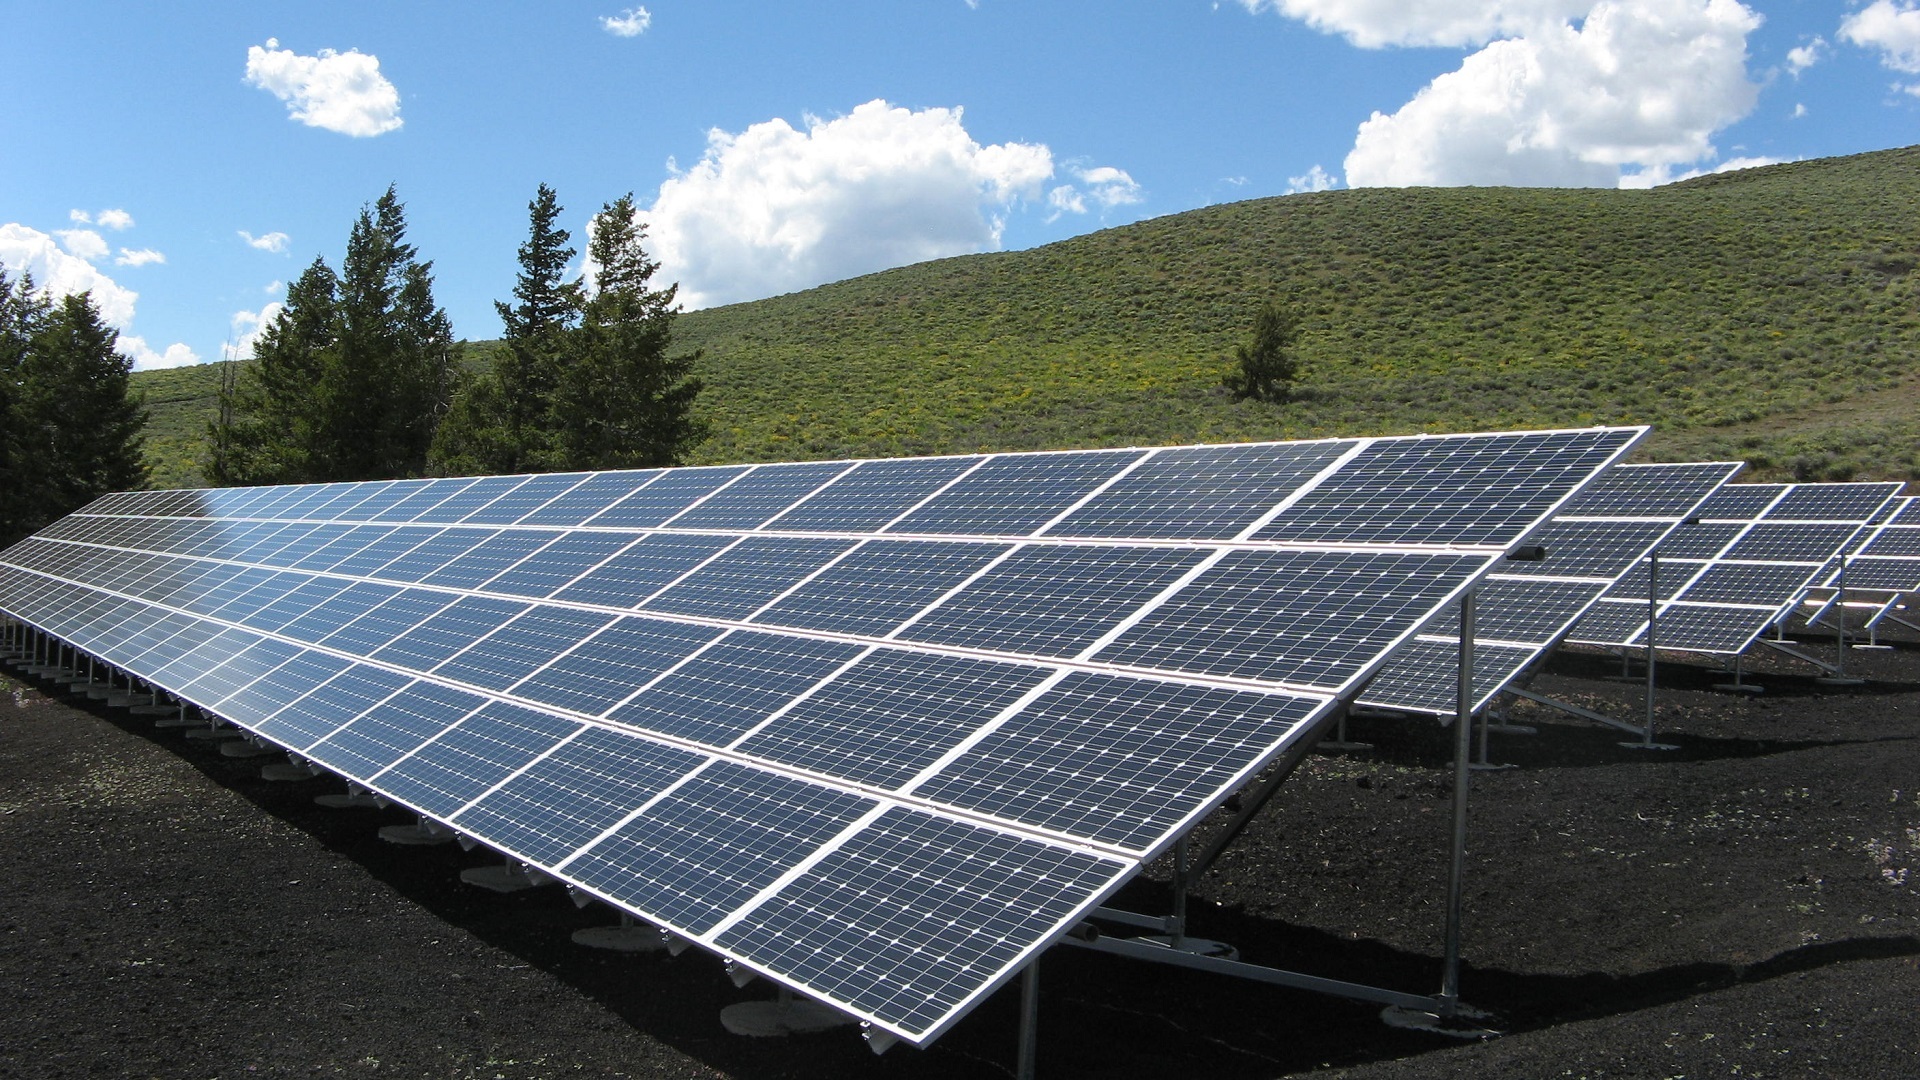 AleaSoft - solar panel array